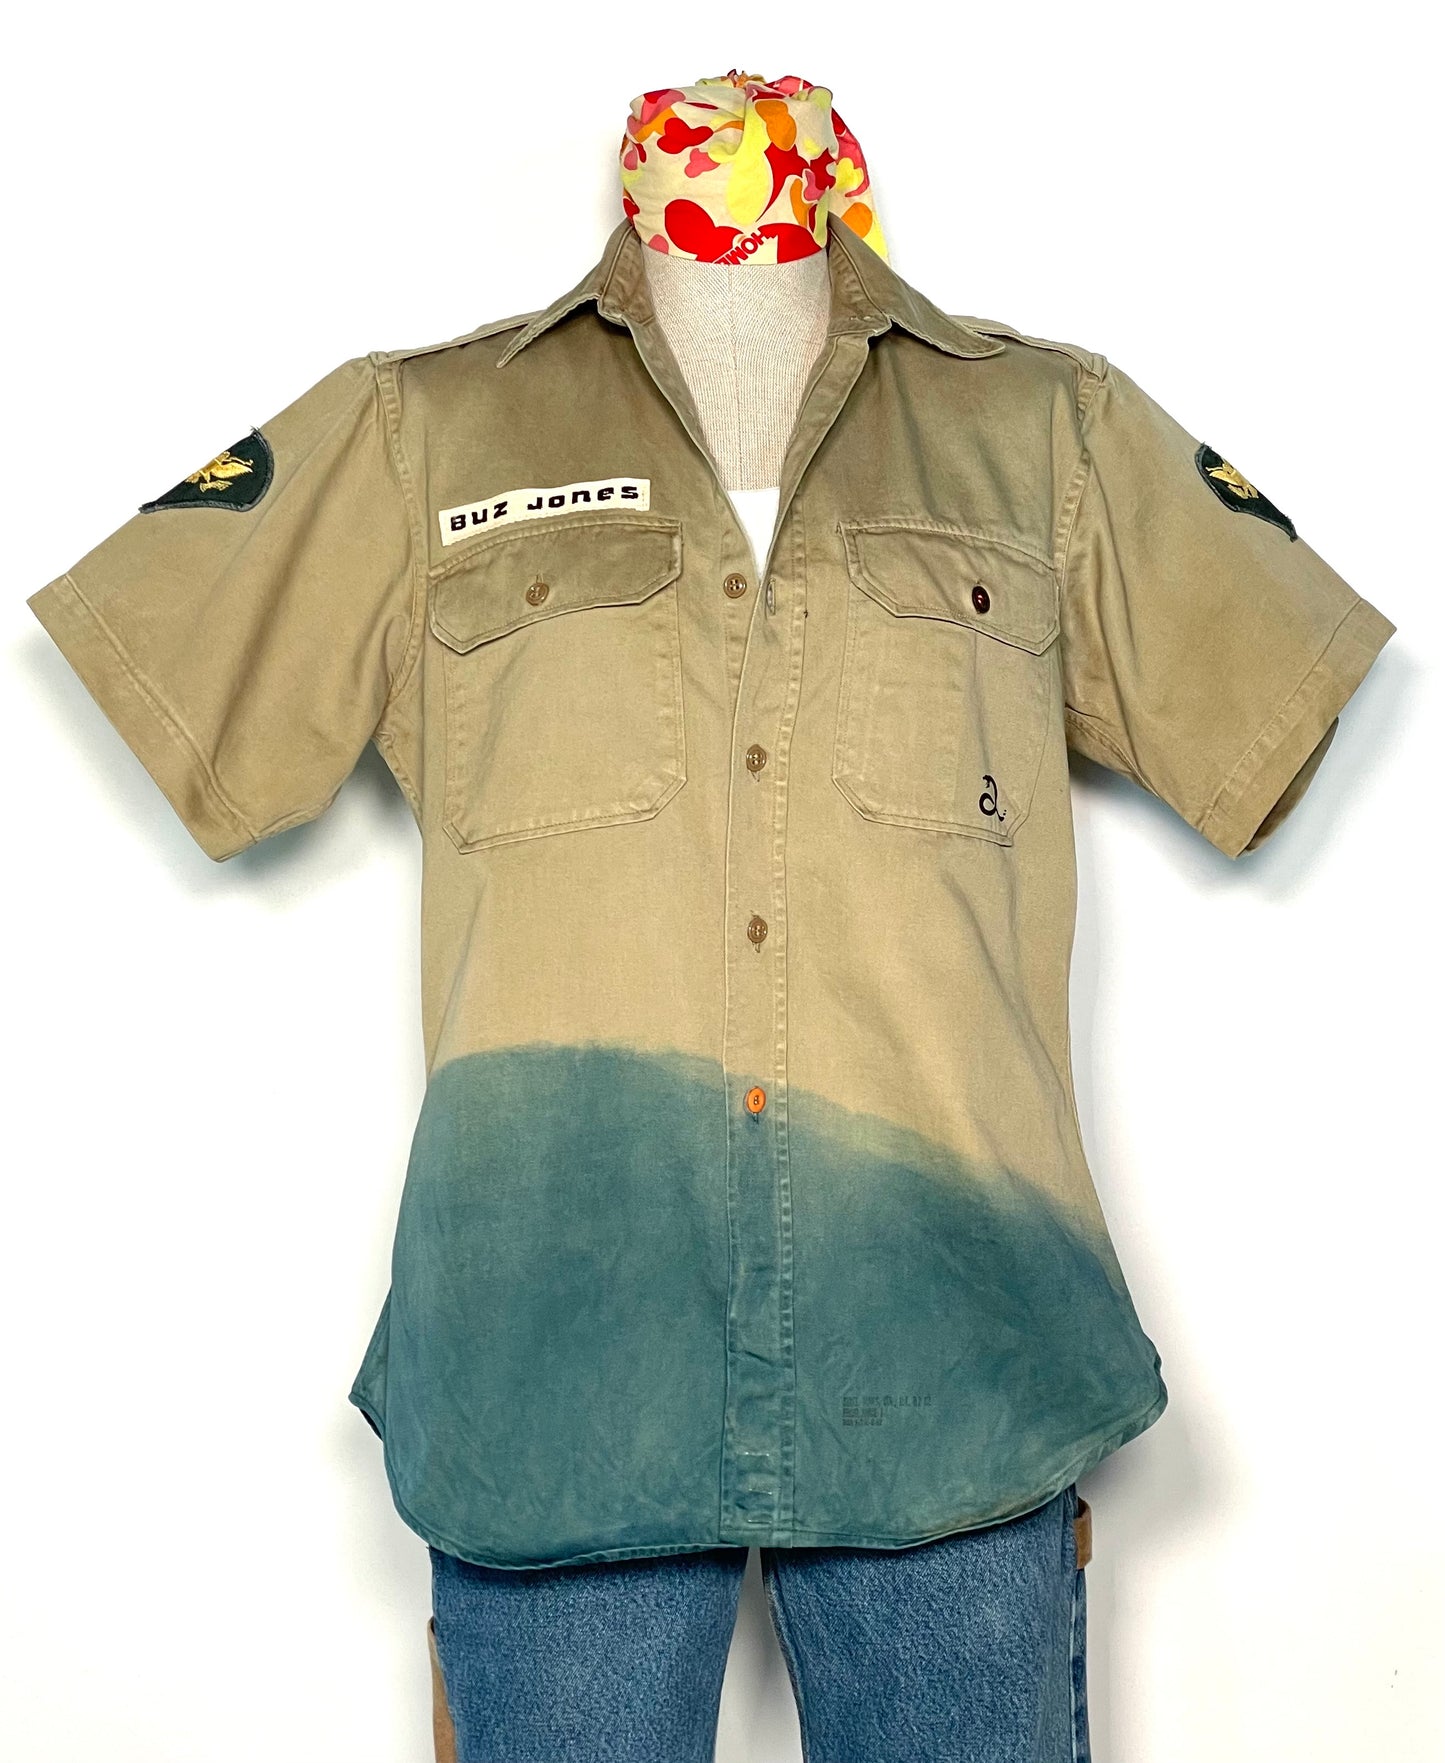 1970's Army shirt